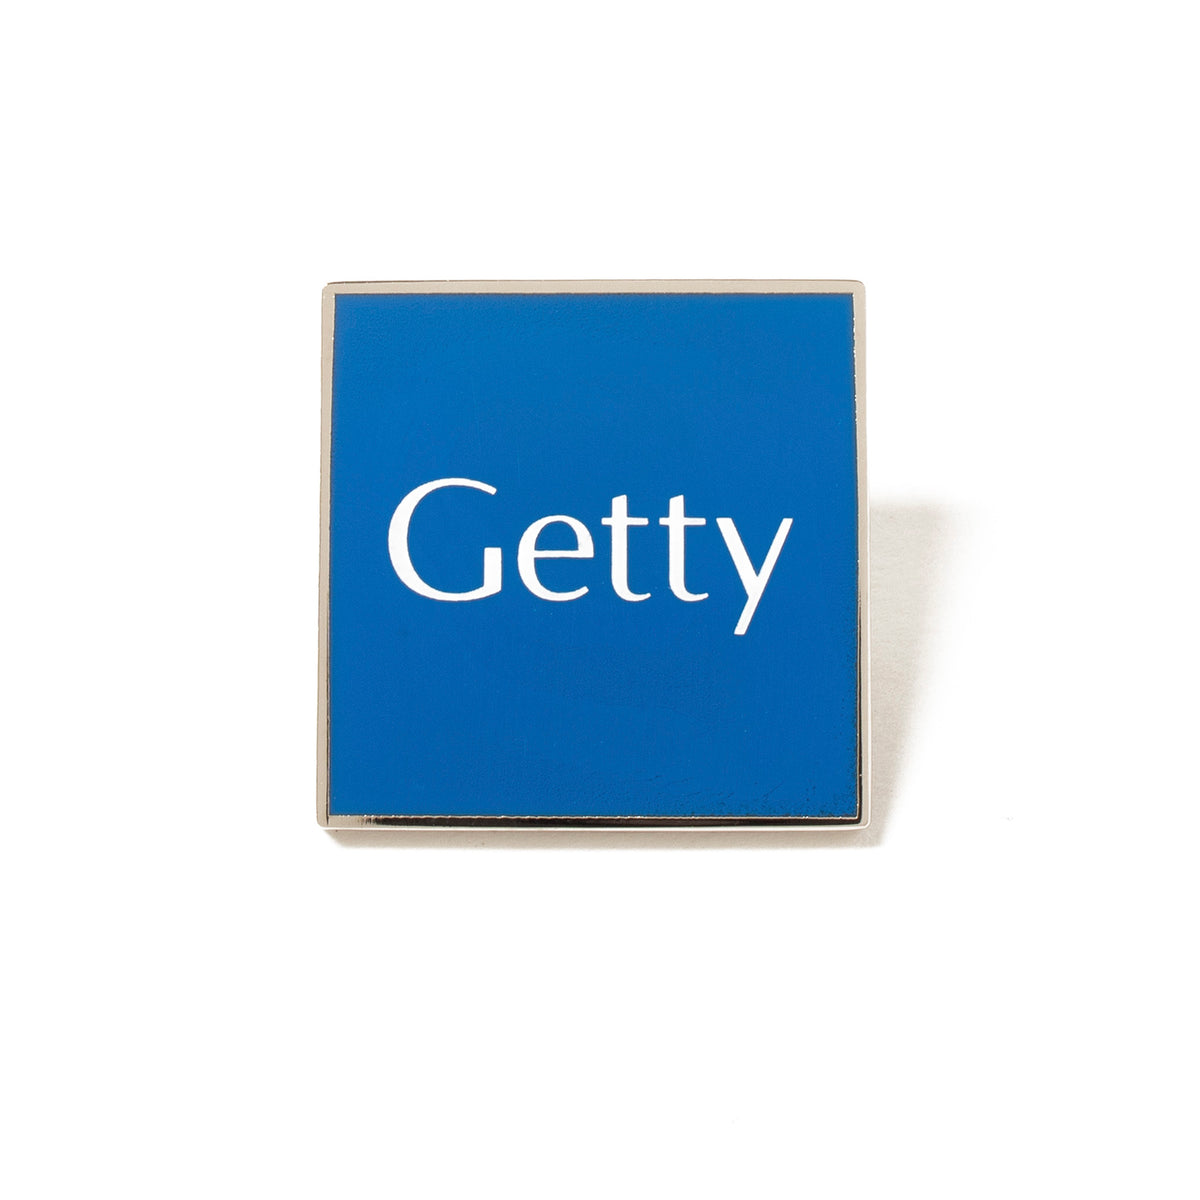 Getty Logo Collector Pin - Blue Enamel